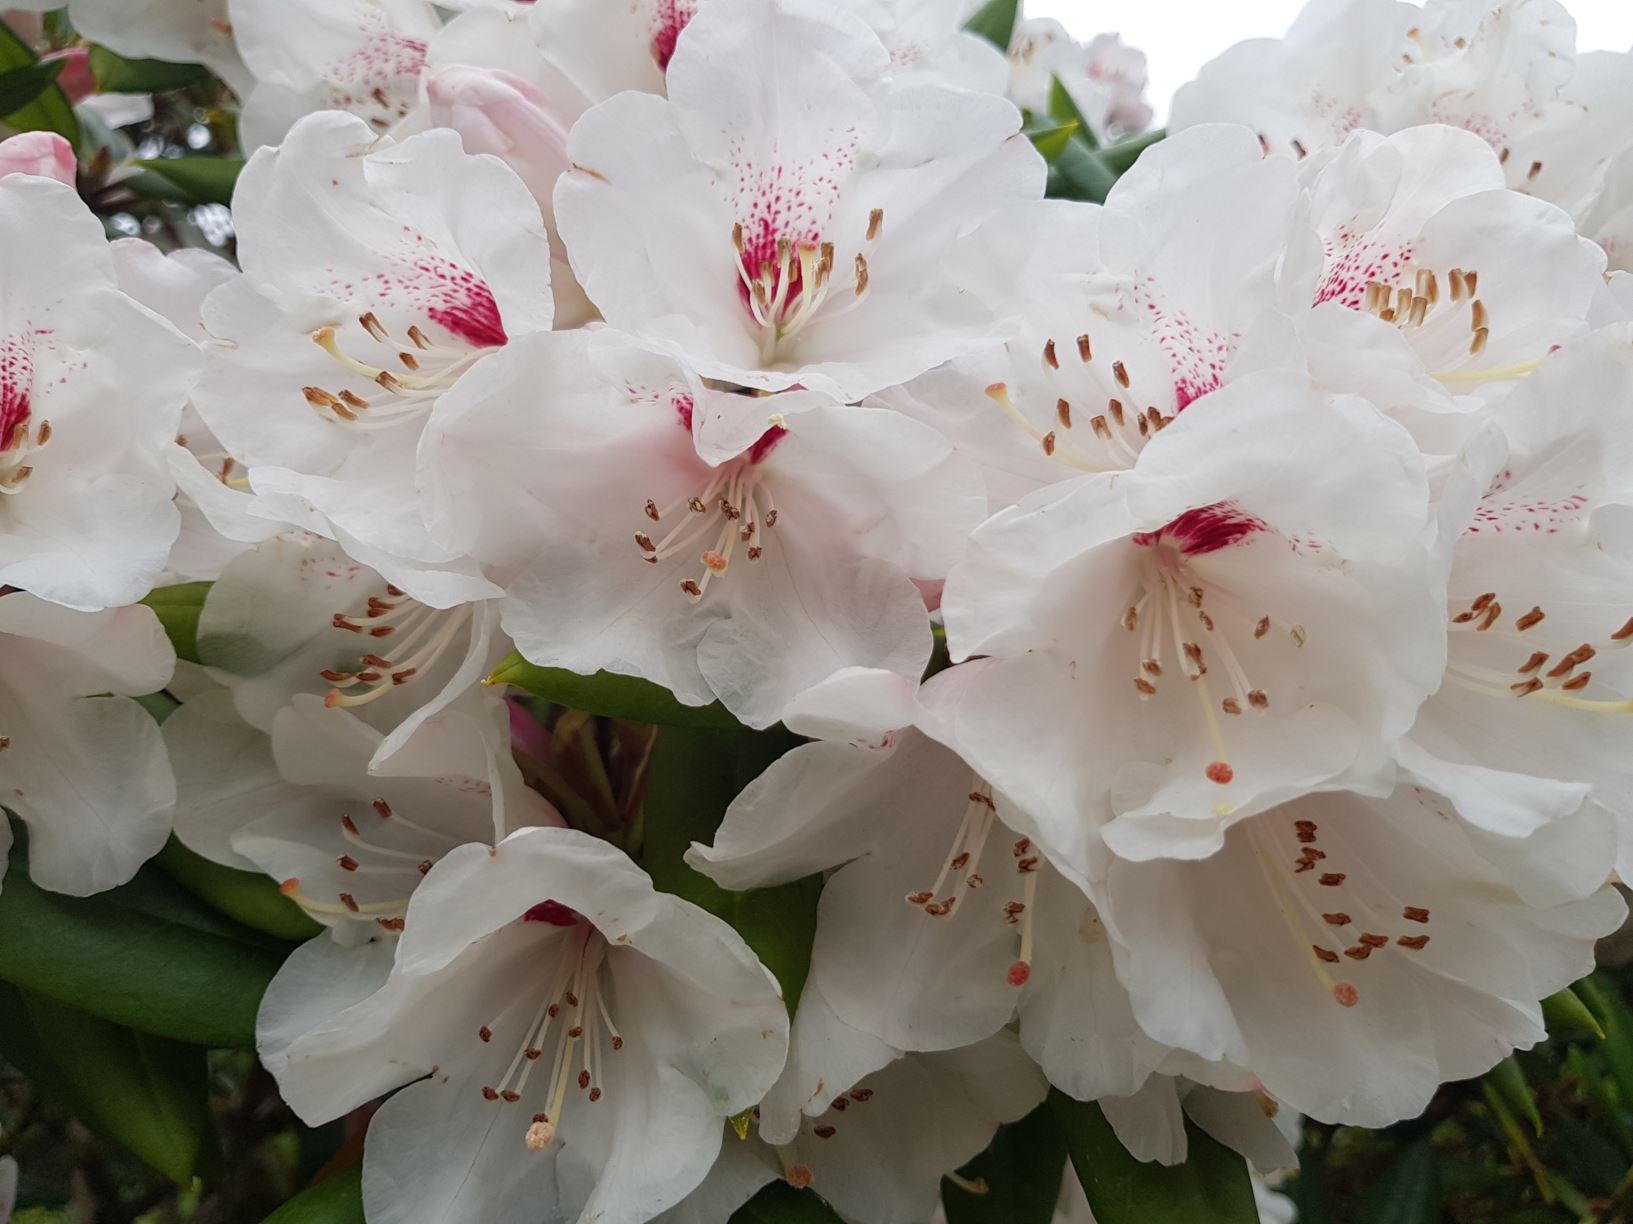 Rhododendron morii